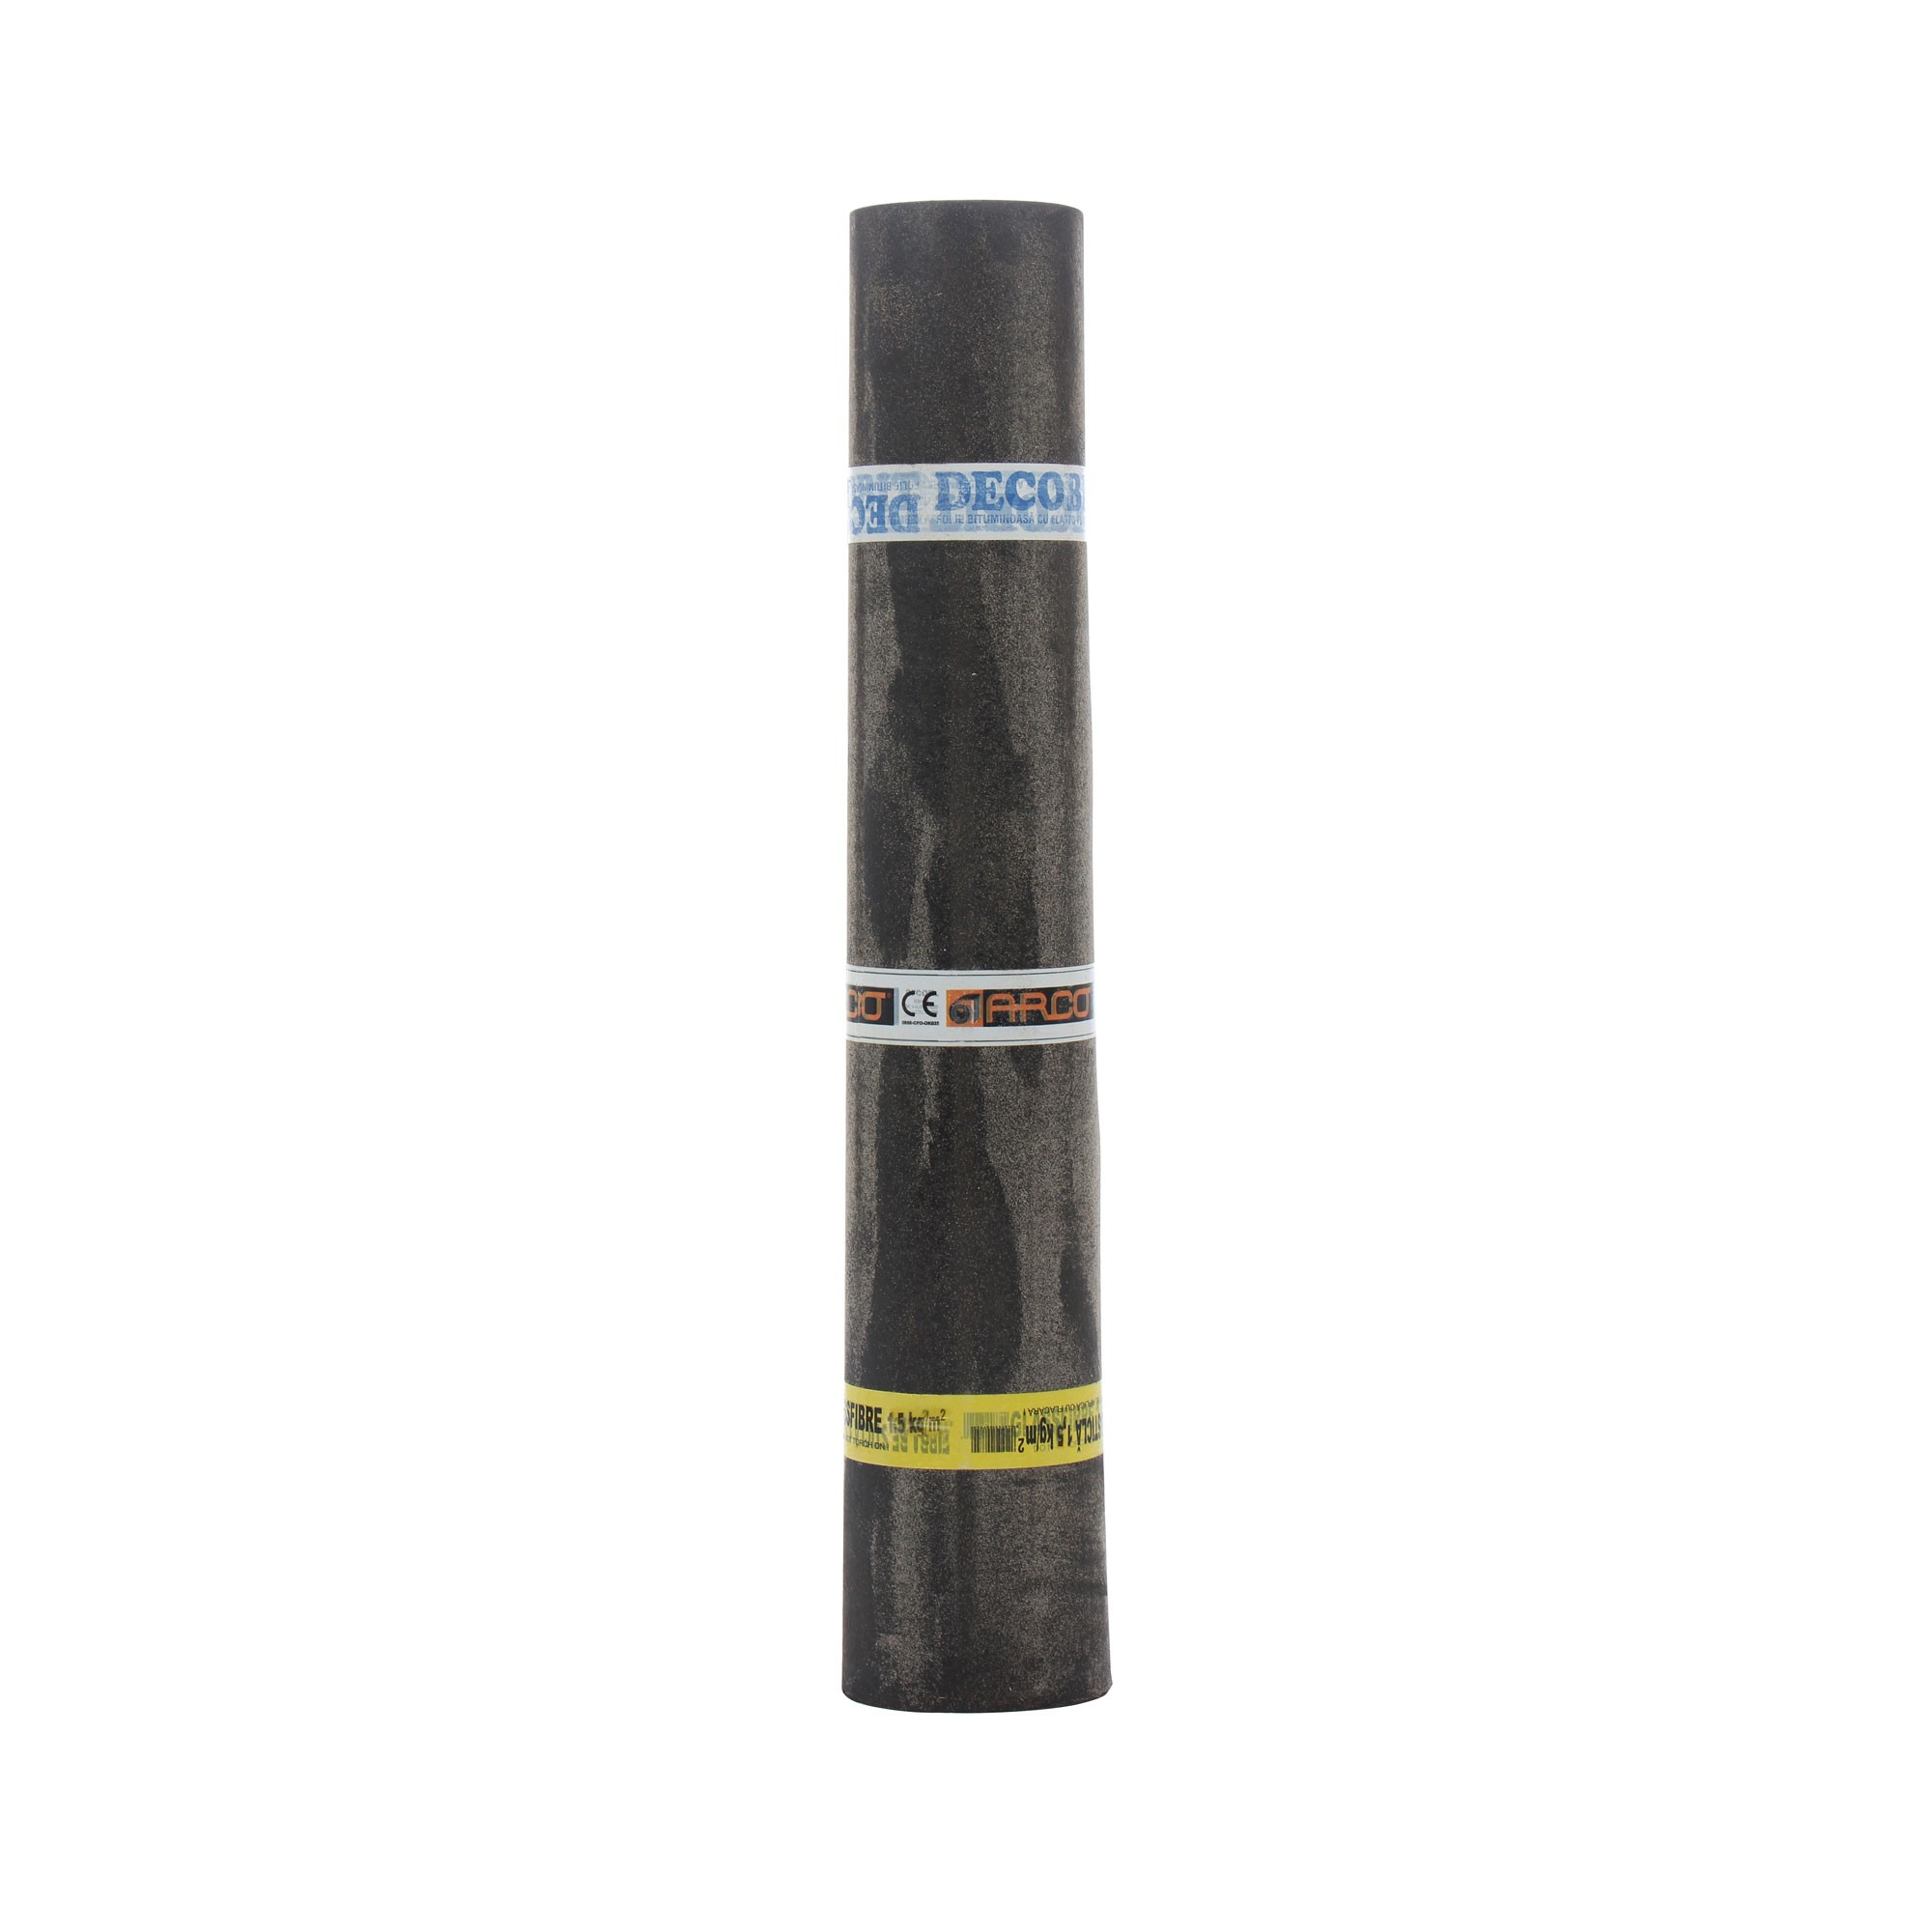 Waterproofing membranes - Arco Decobit V 1.3kg/mp 1x10m/roll, https:maxbau.ro